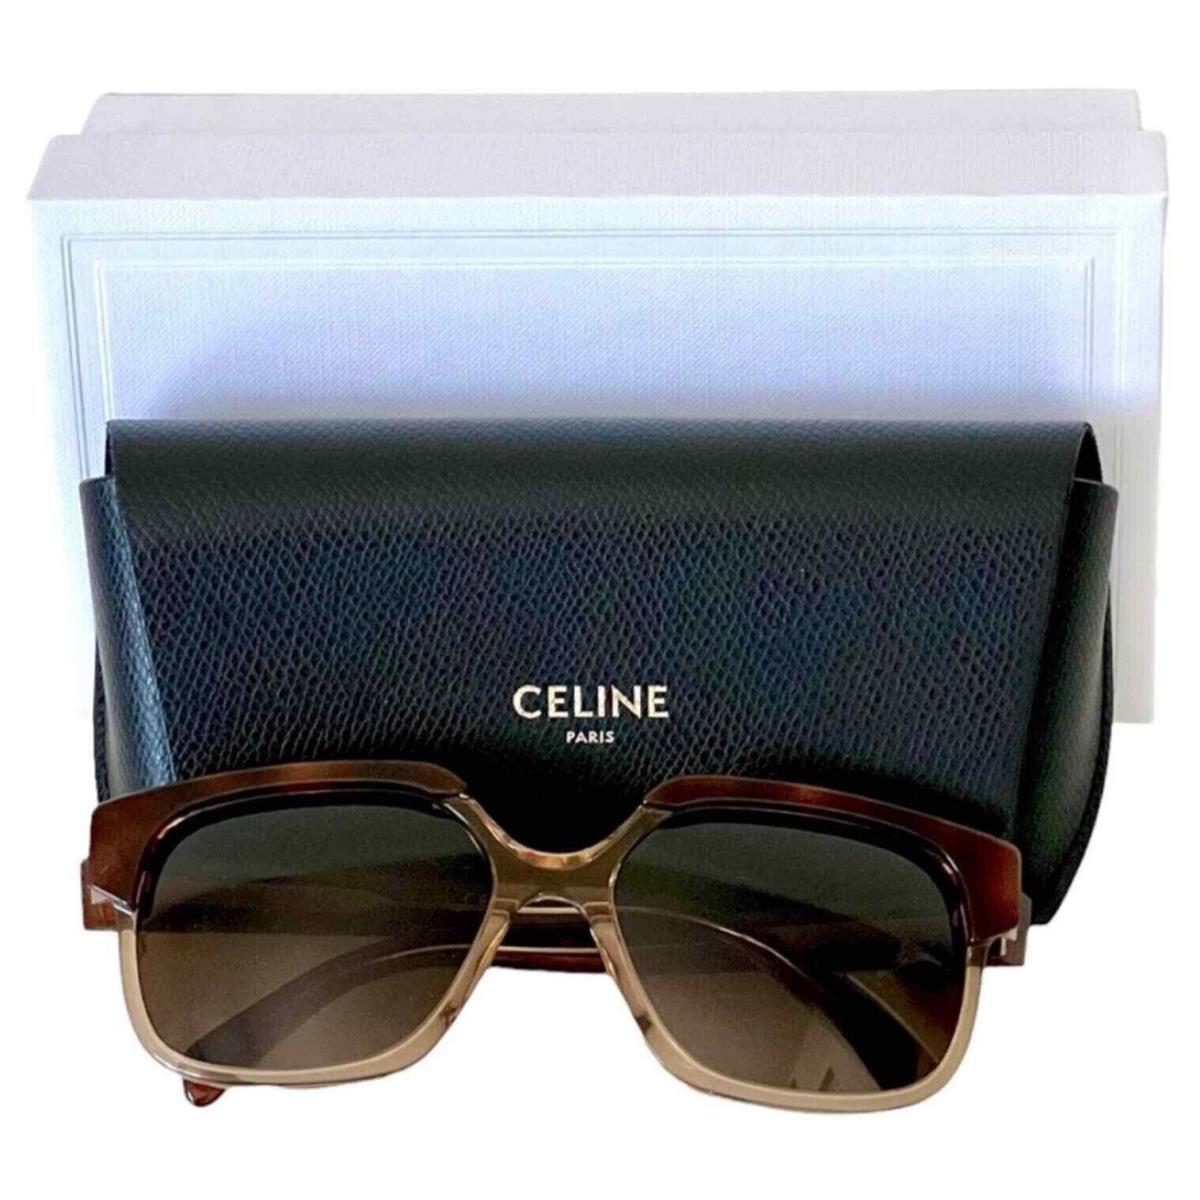 Celine Brand - Shop Celine fashion accessories | Fash Brands